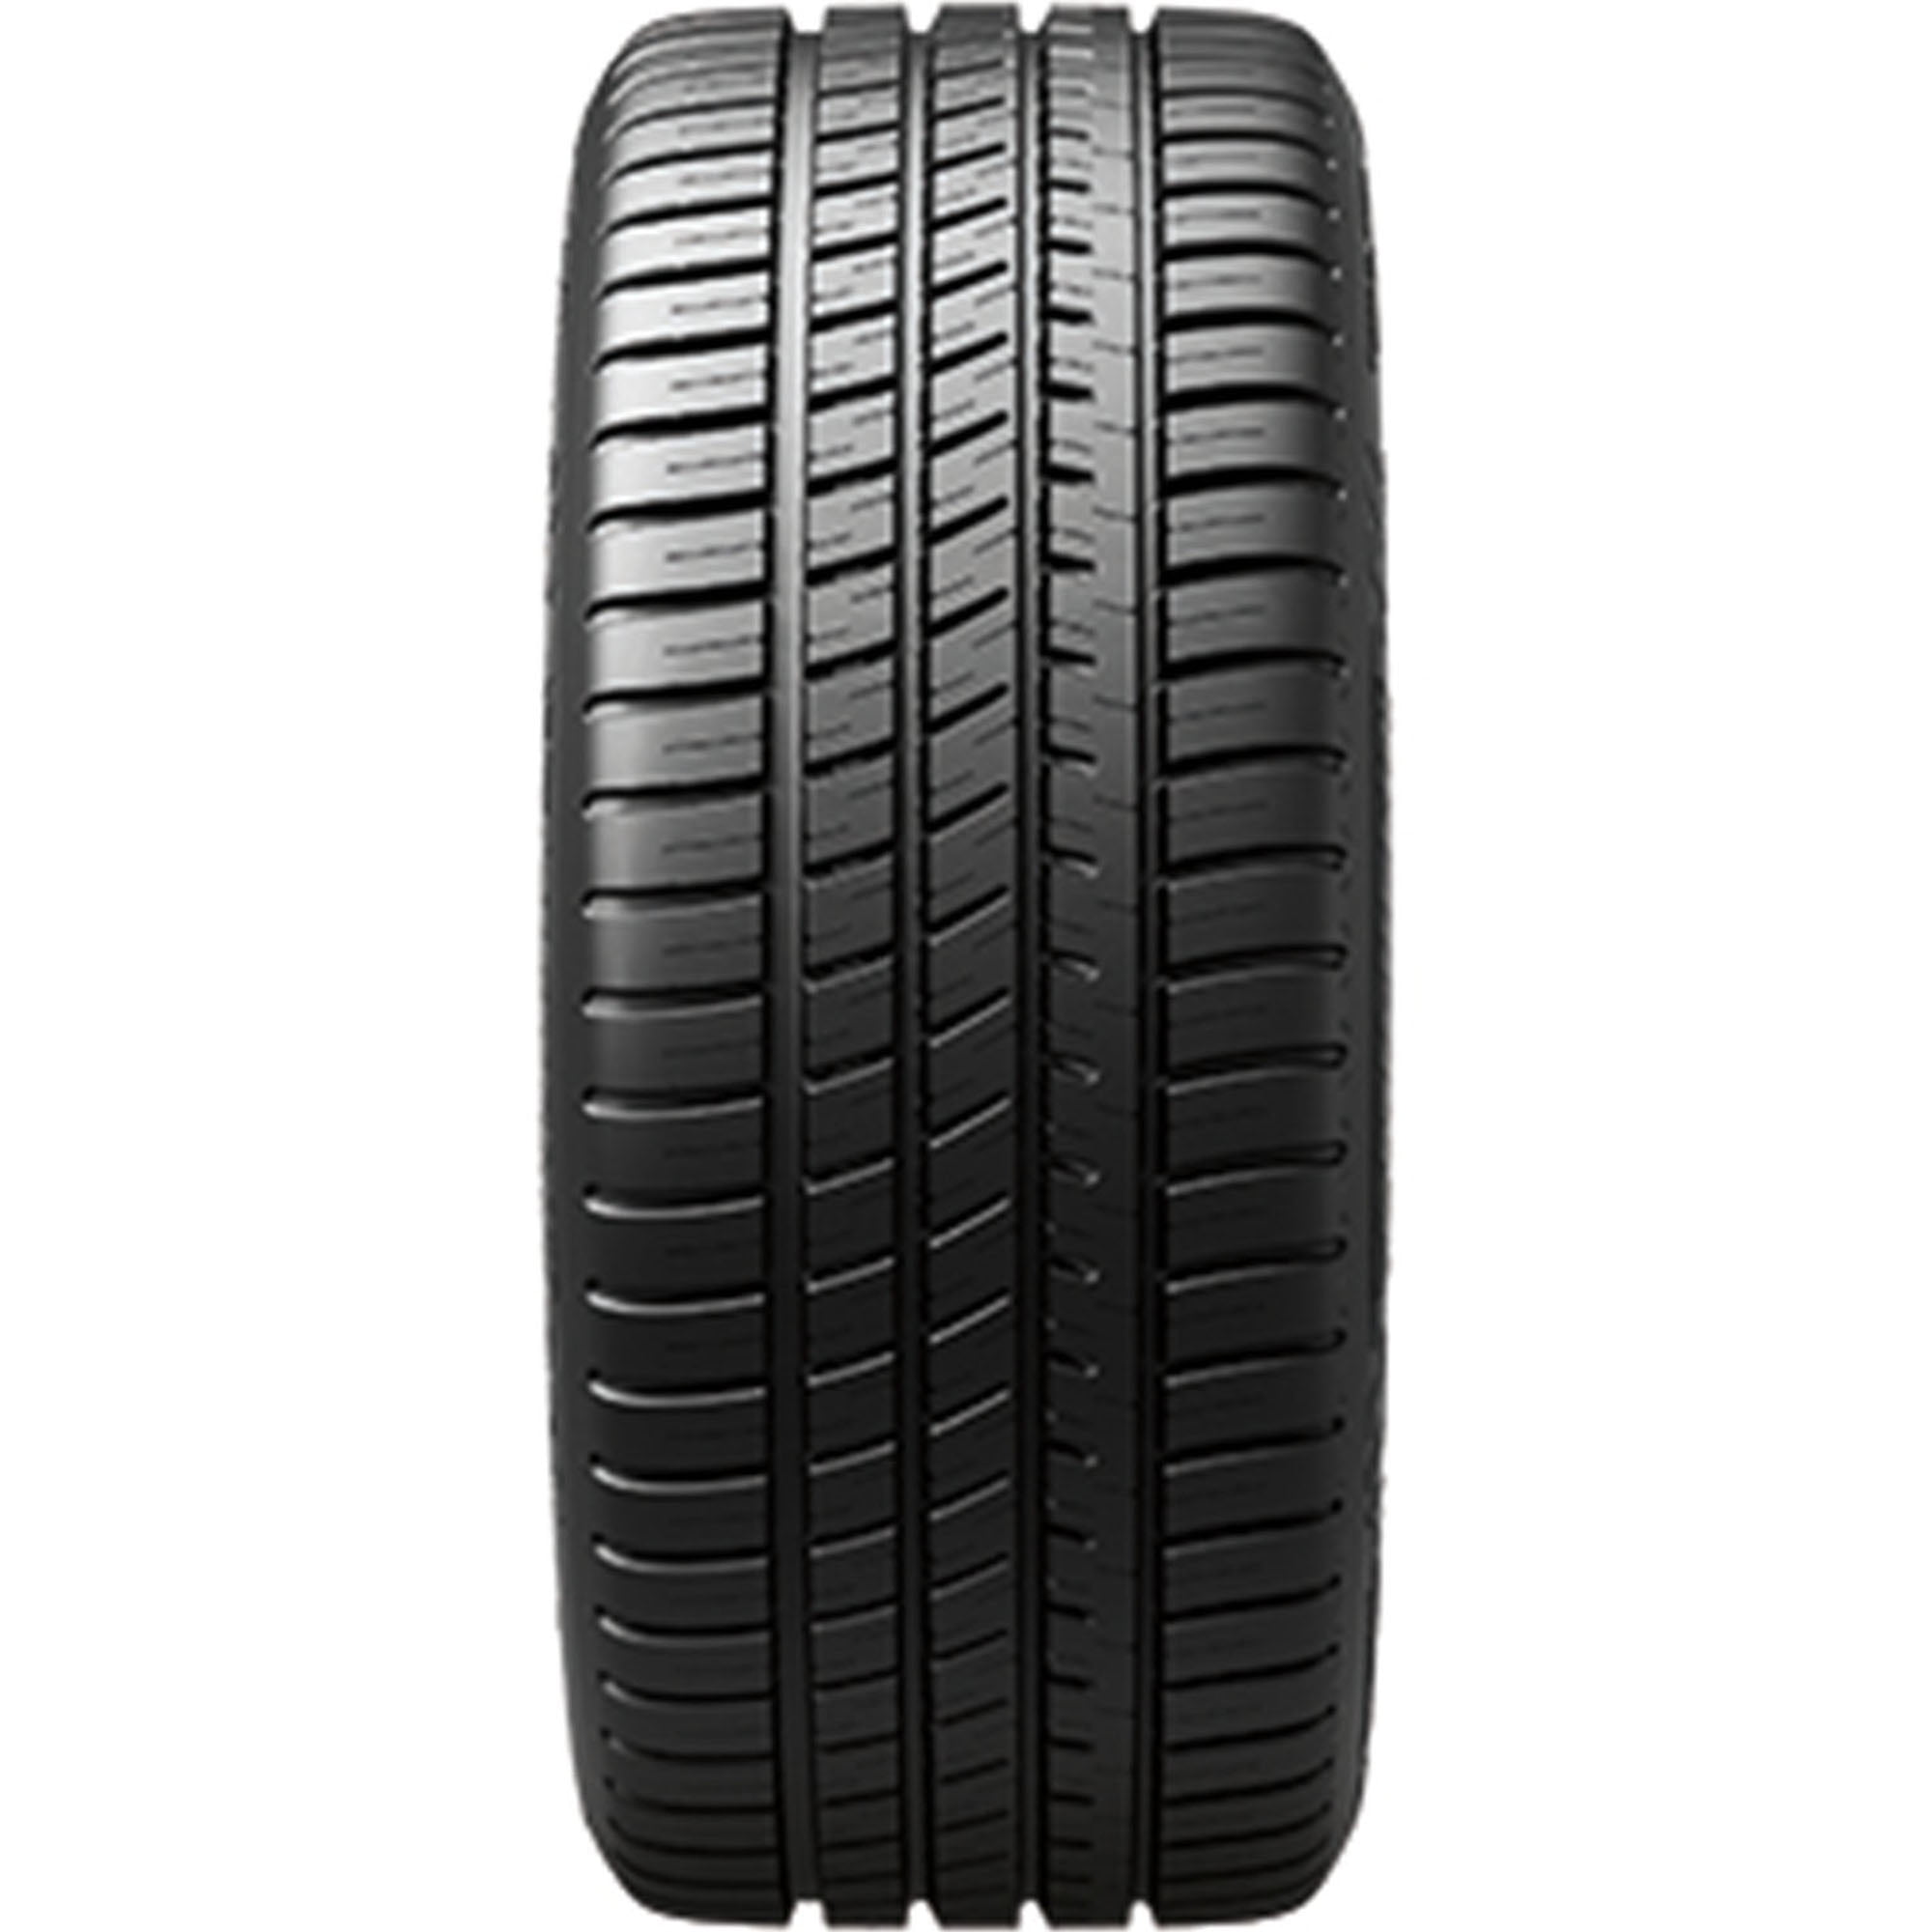 A/S Pilot Tire Passenger Michelin UHP XL Season 195/45R16 84V Sport 3+ All